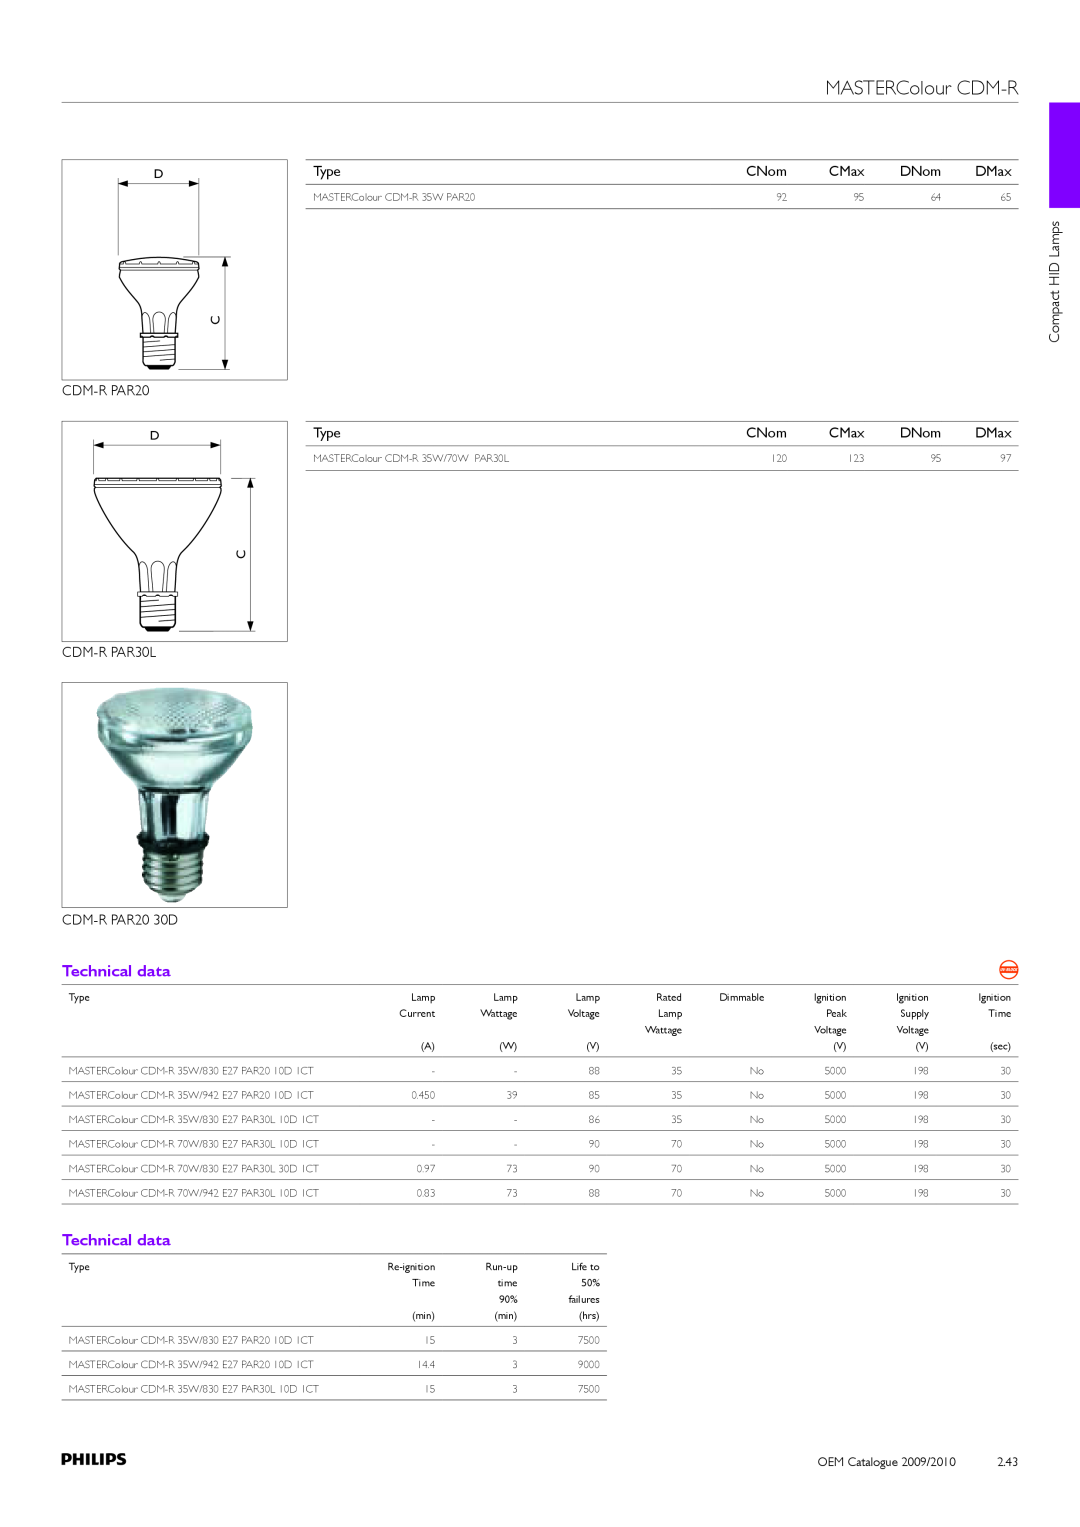 Philips Compact HID Lamp and Gear manual MASTERColour CDM-R, Technical data, CDM-RPAR20 